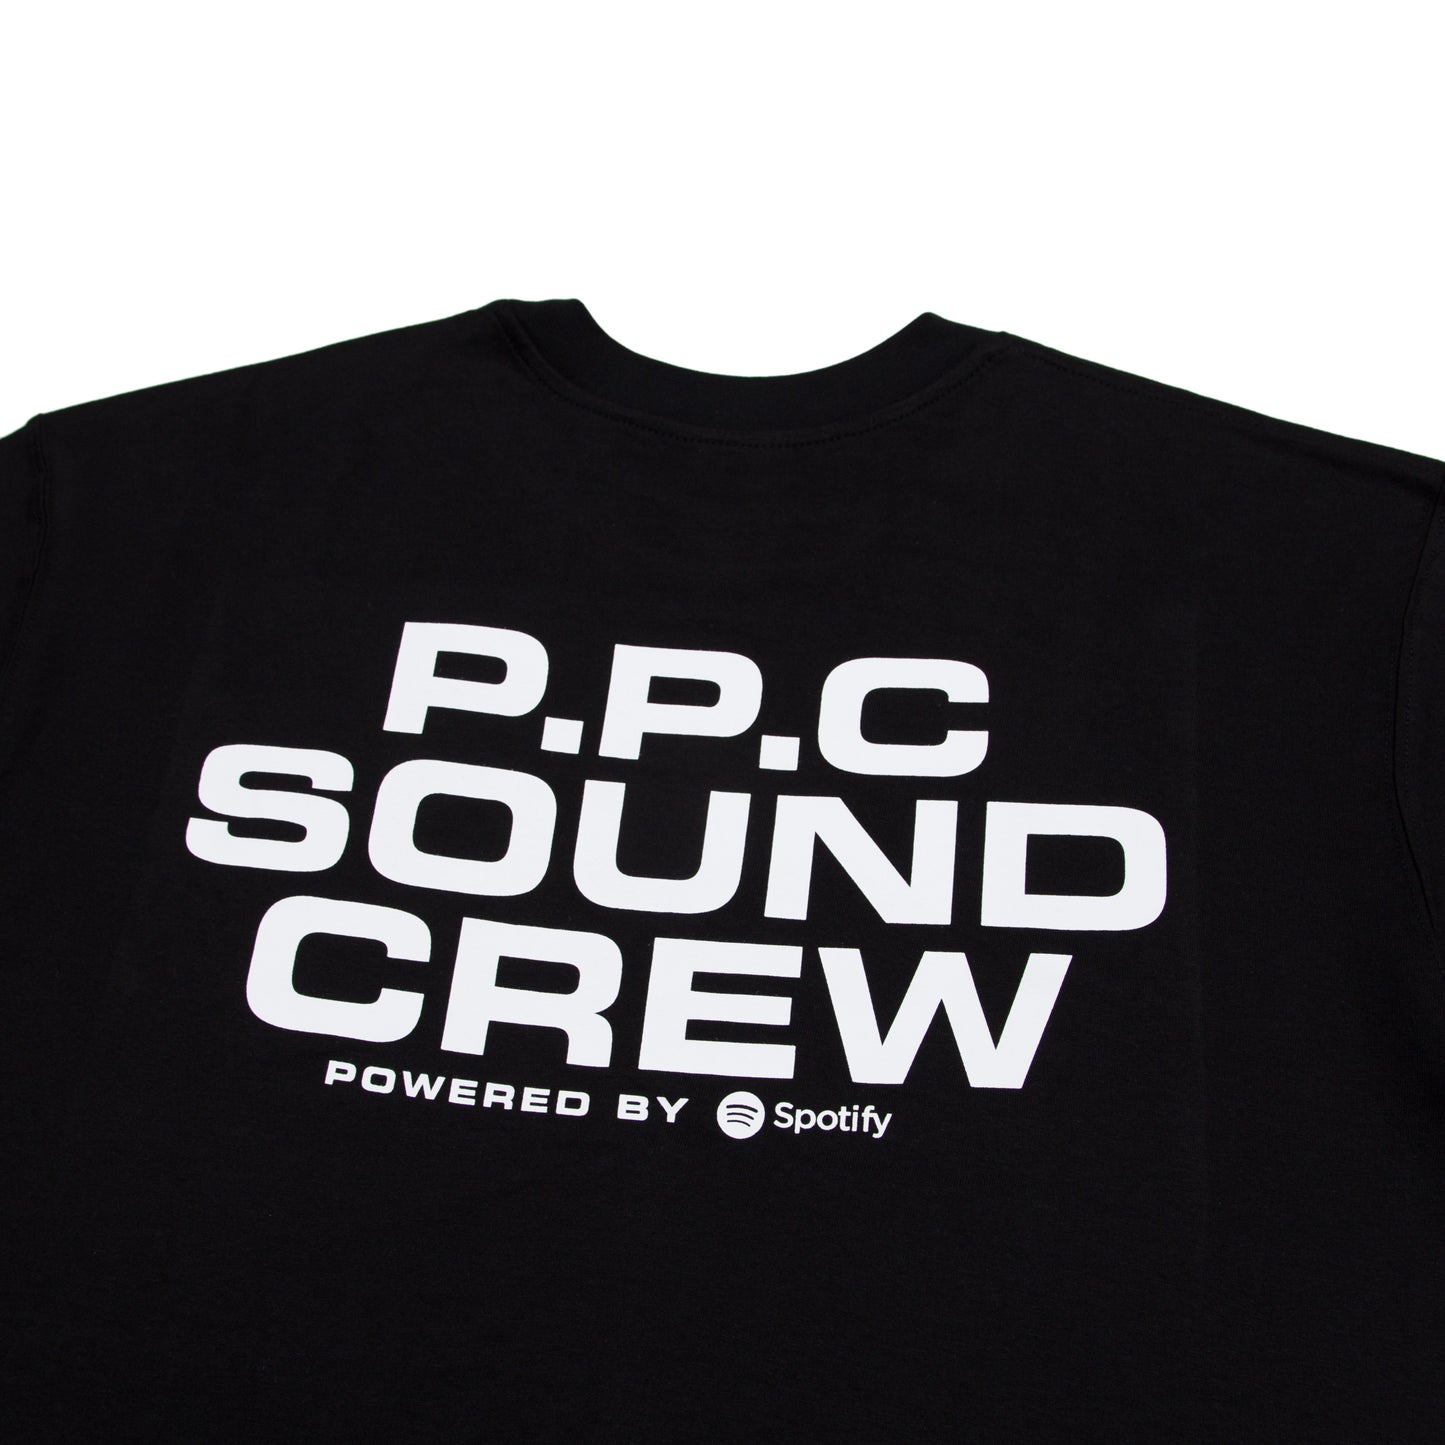 “PPC SOUND powered by Spotify "PPC Crew" T-shirt - Black